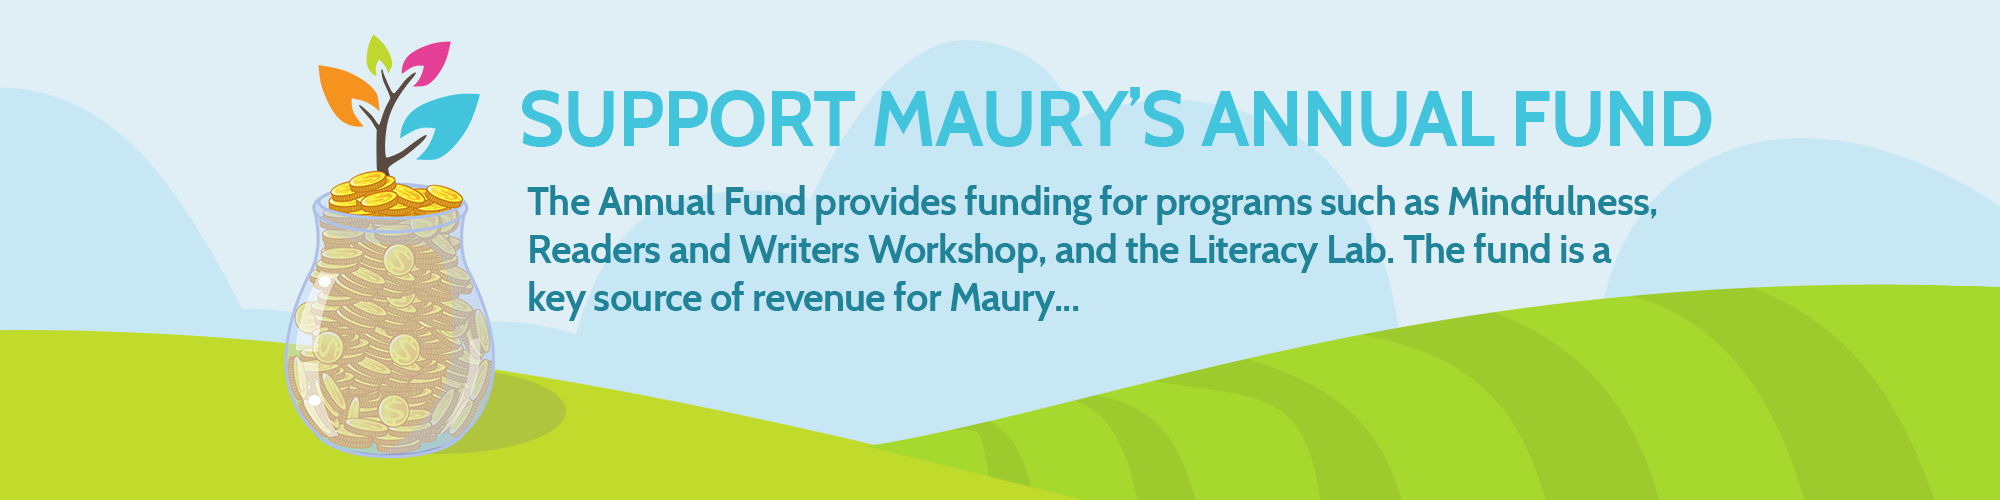 maury-annual-fund-slide